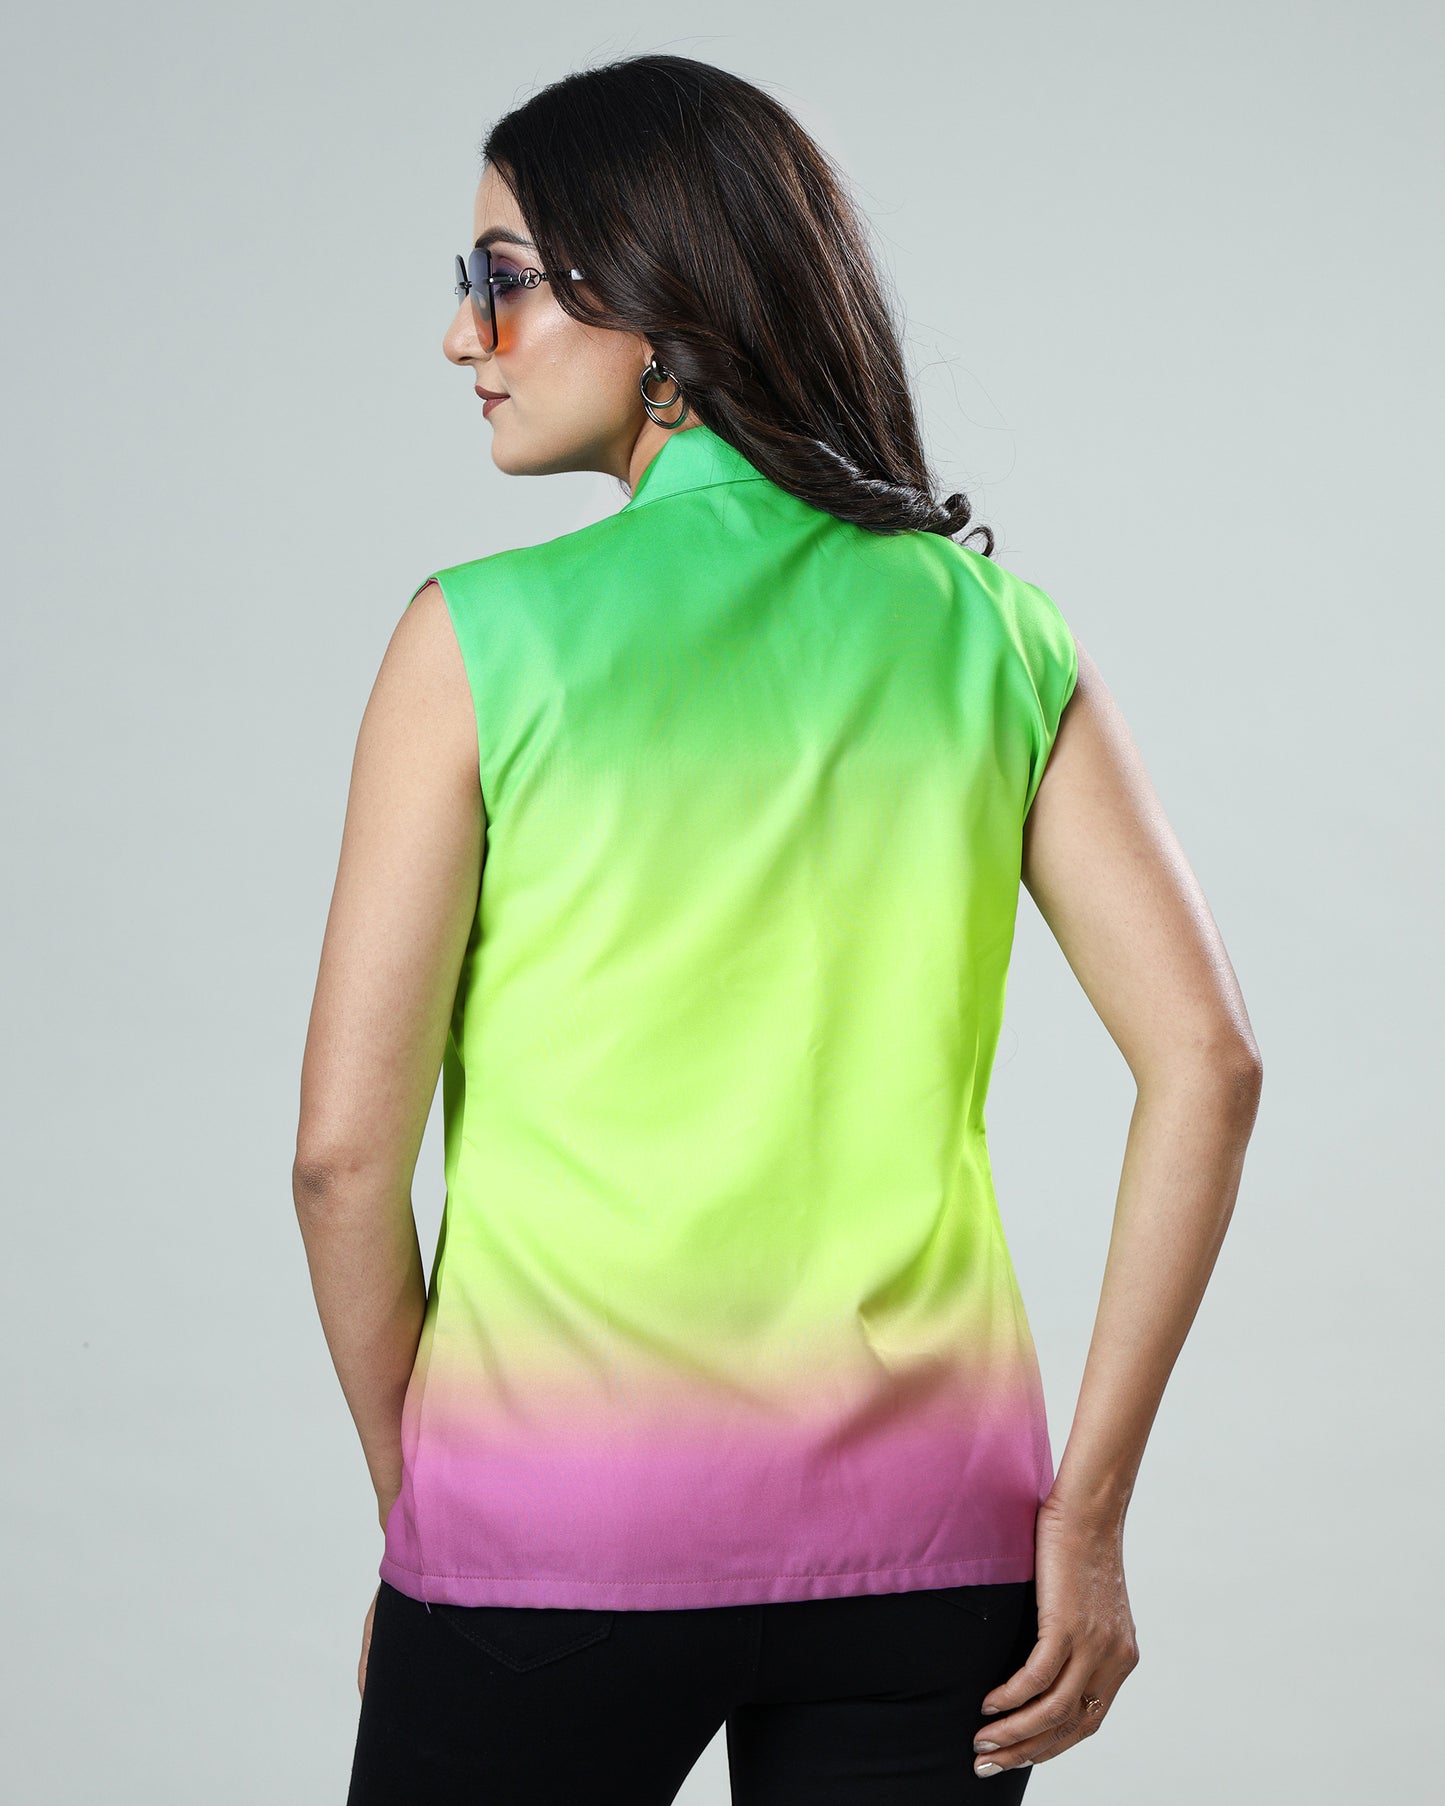 The Ombre Look: Women's Sleeveless Jacket